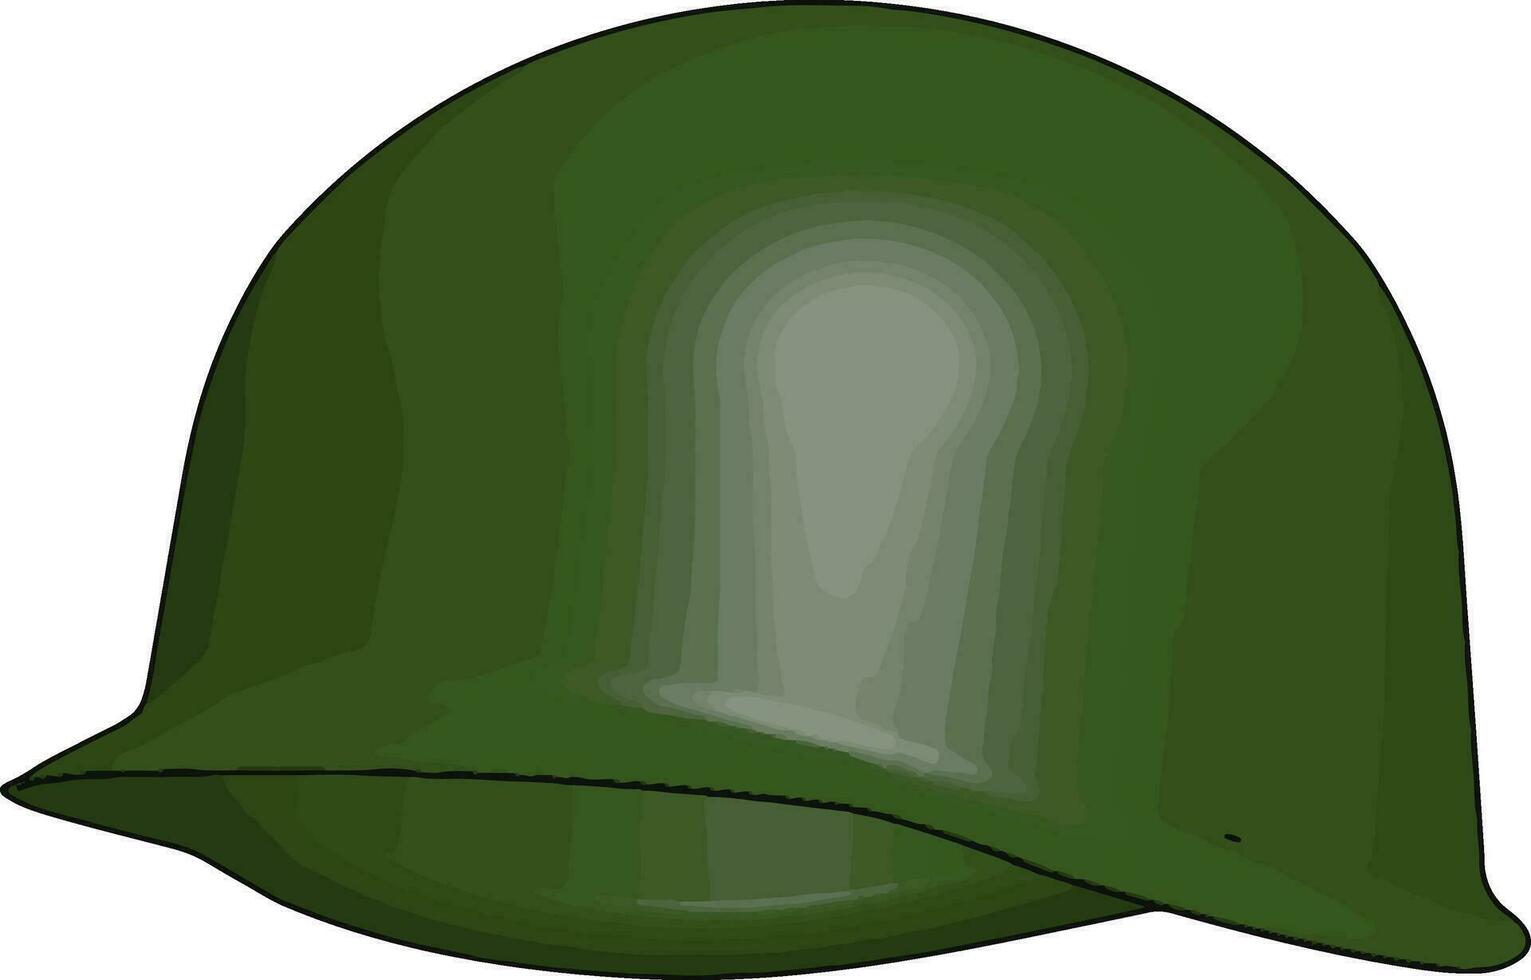 Kampf ballistisch Helm Vektor oder Farbe Illustration